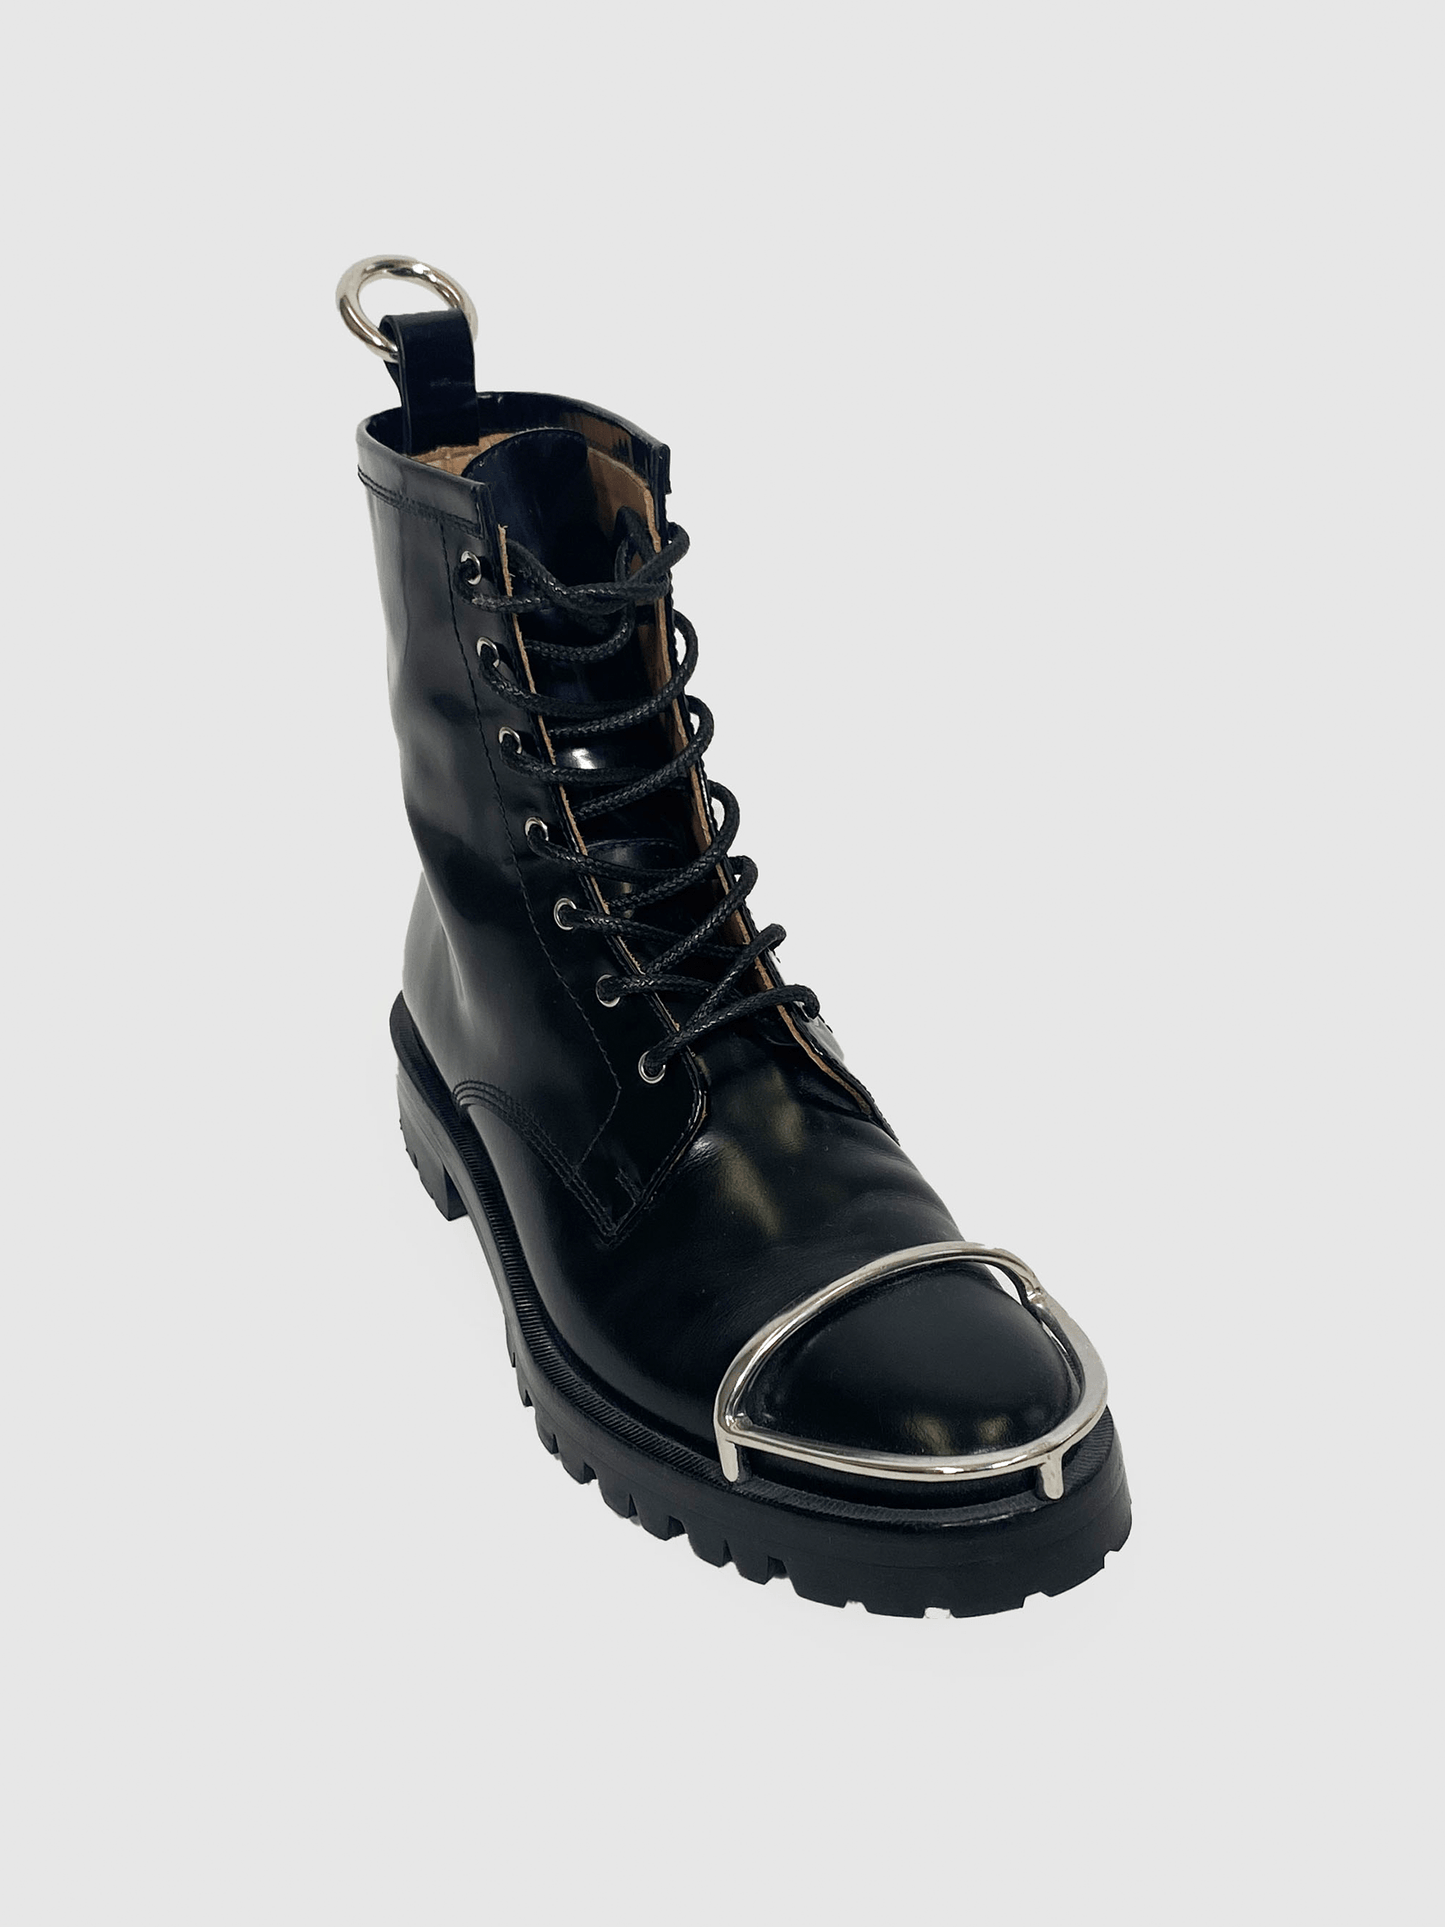 Alexander Wang Black Patent Leather Lyndon Combat Boots